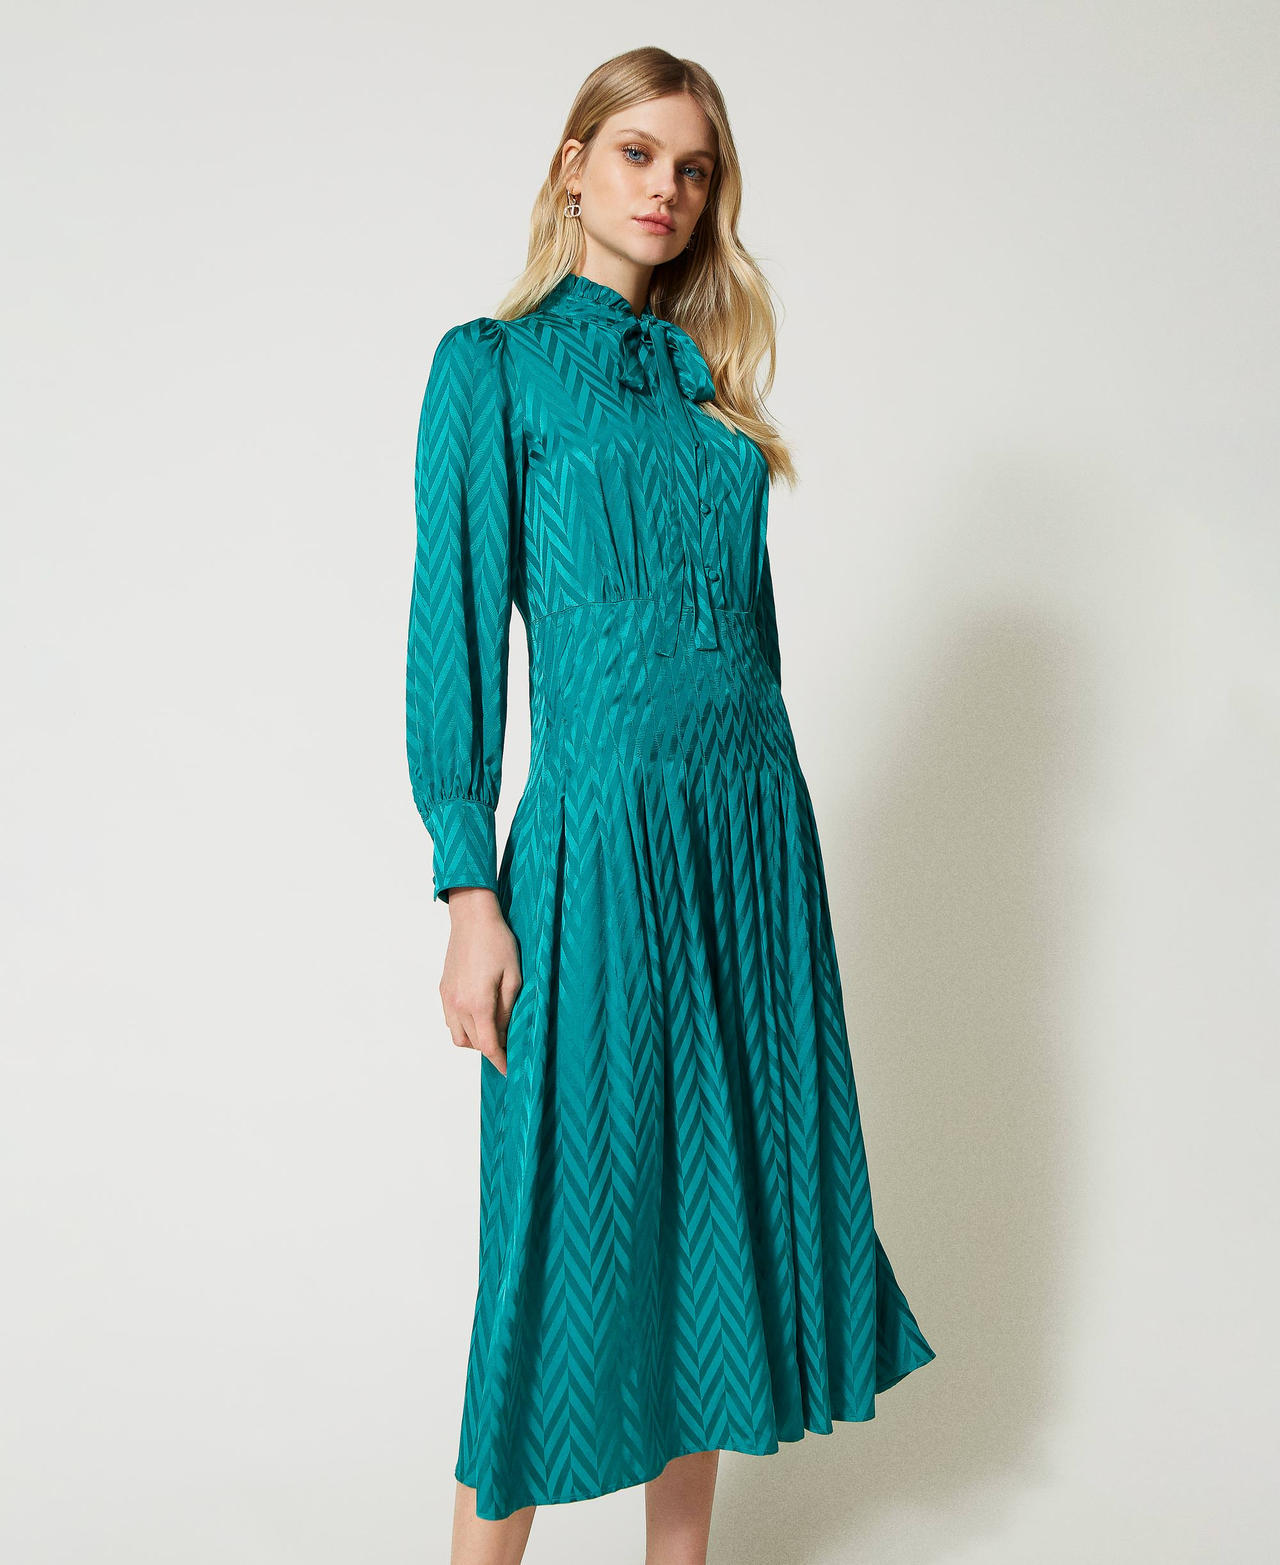 Robe longue jacquard à chevrons Vert « Light Emerald » Femme 231TP2161-03